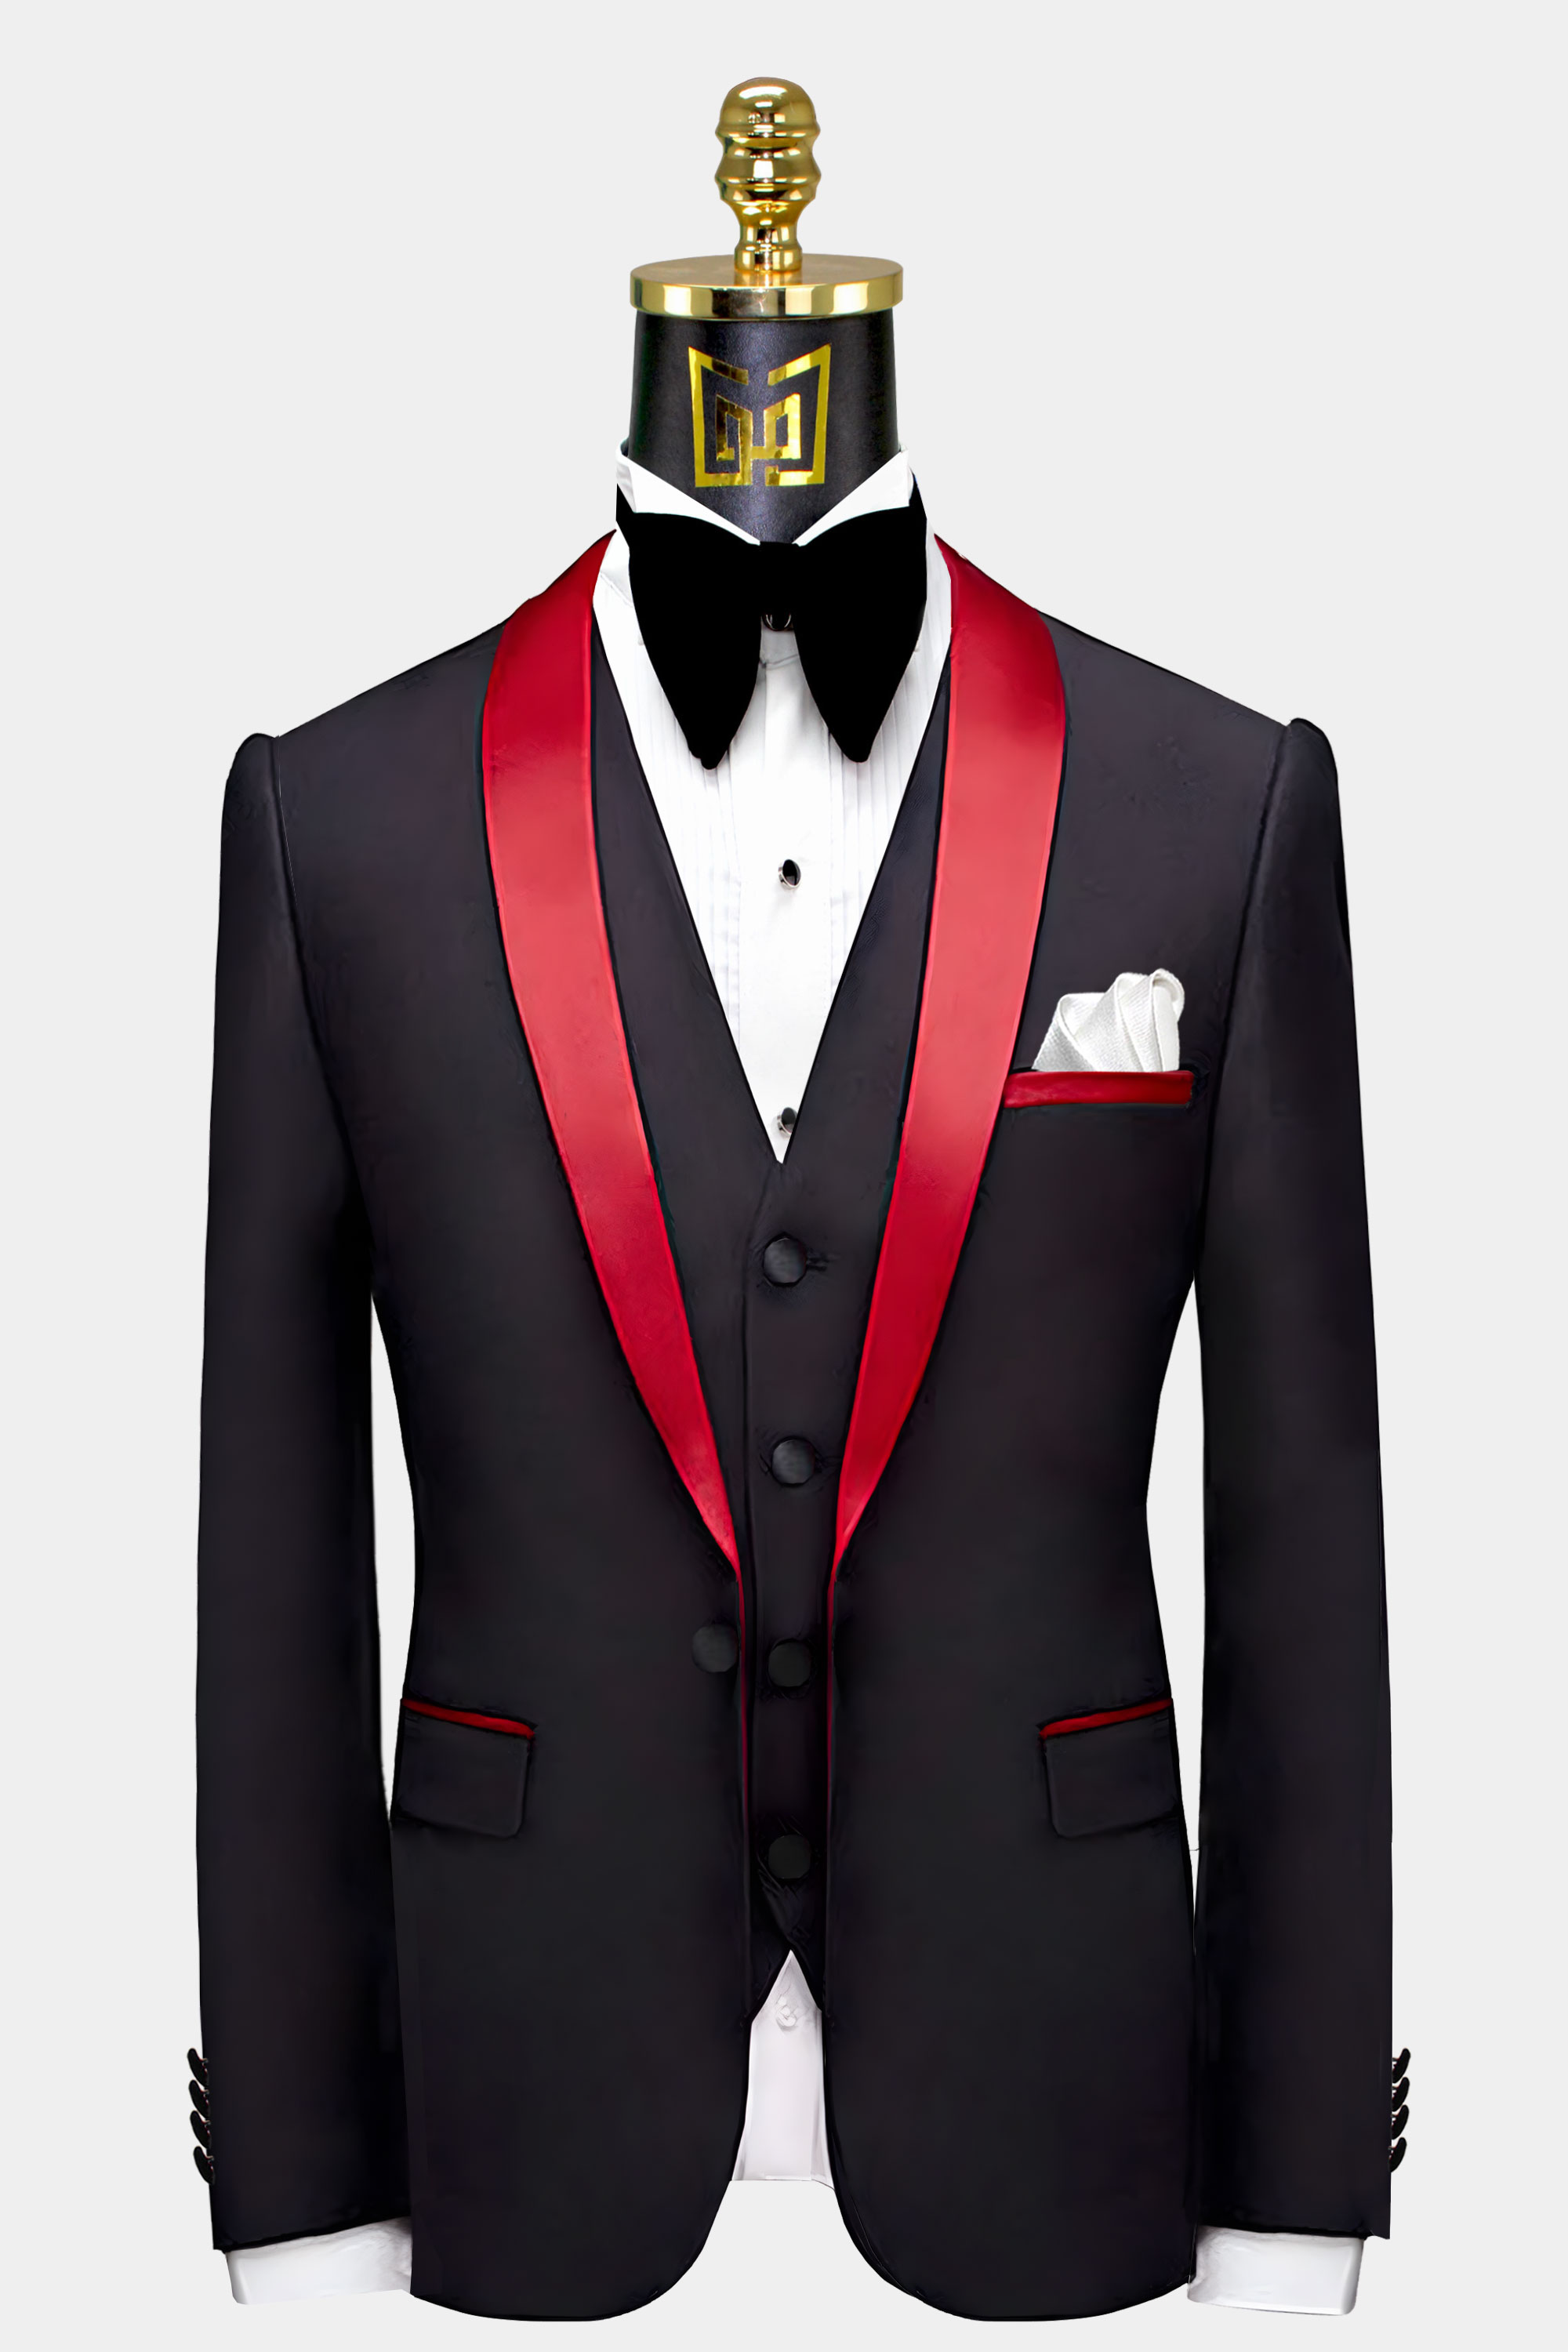 Mens-Black-Tuxedo-Jacket-Blazer-with-Red-Trim-from-Gentlemansguru.com